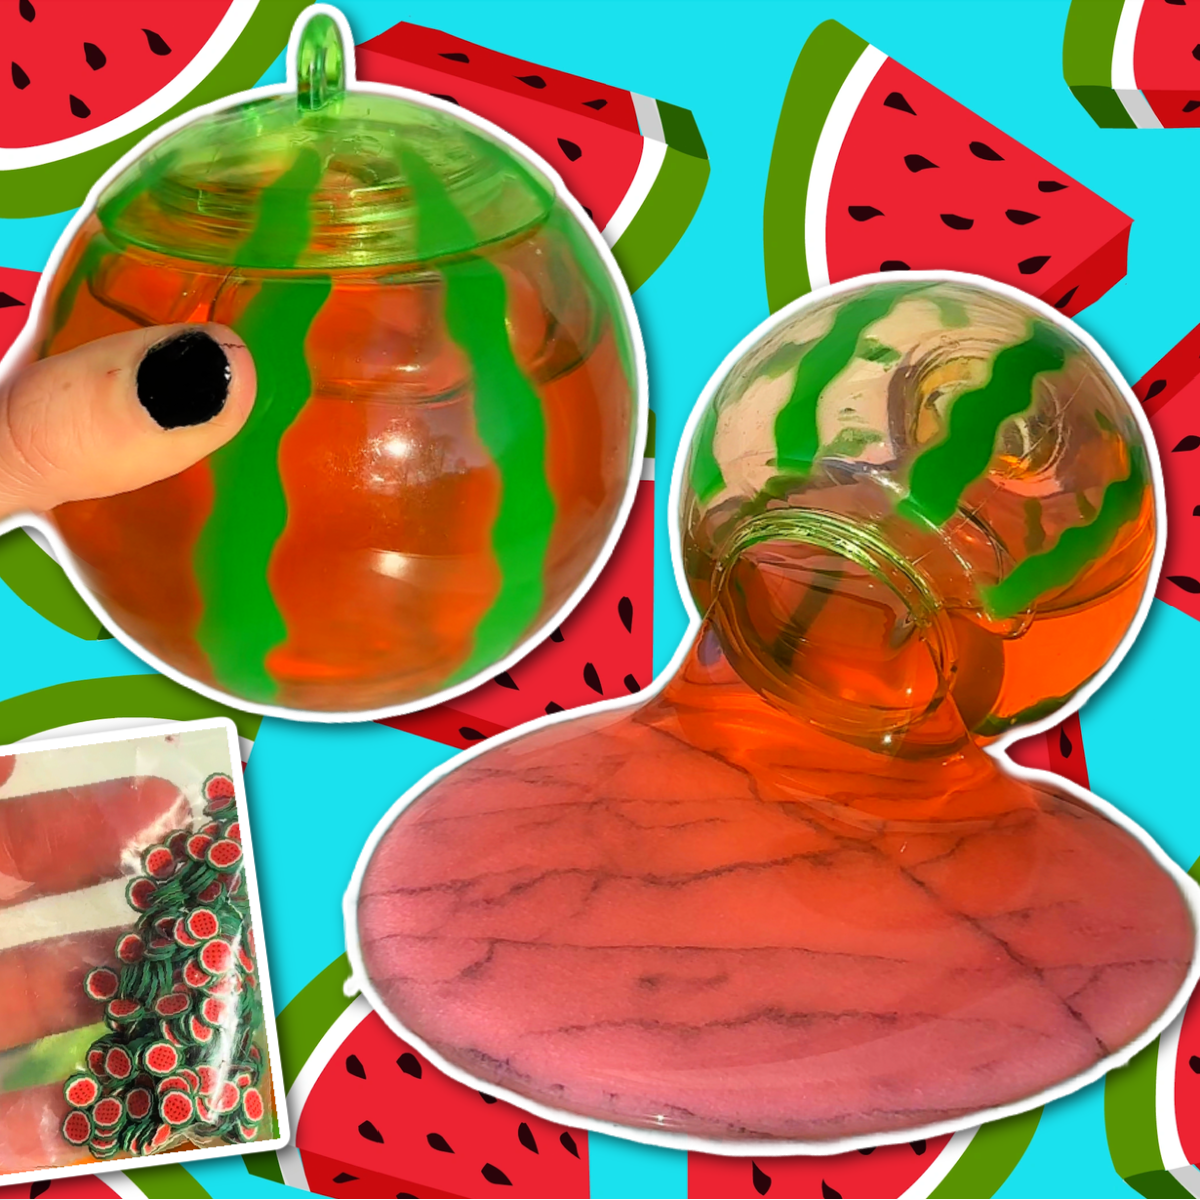 Watermelon Water Slime DIY (+ Watermelon Sprinkles) – Shop Nichole